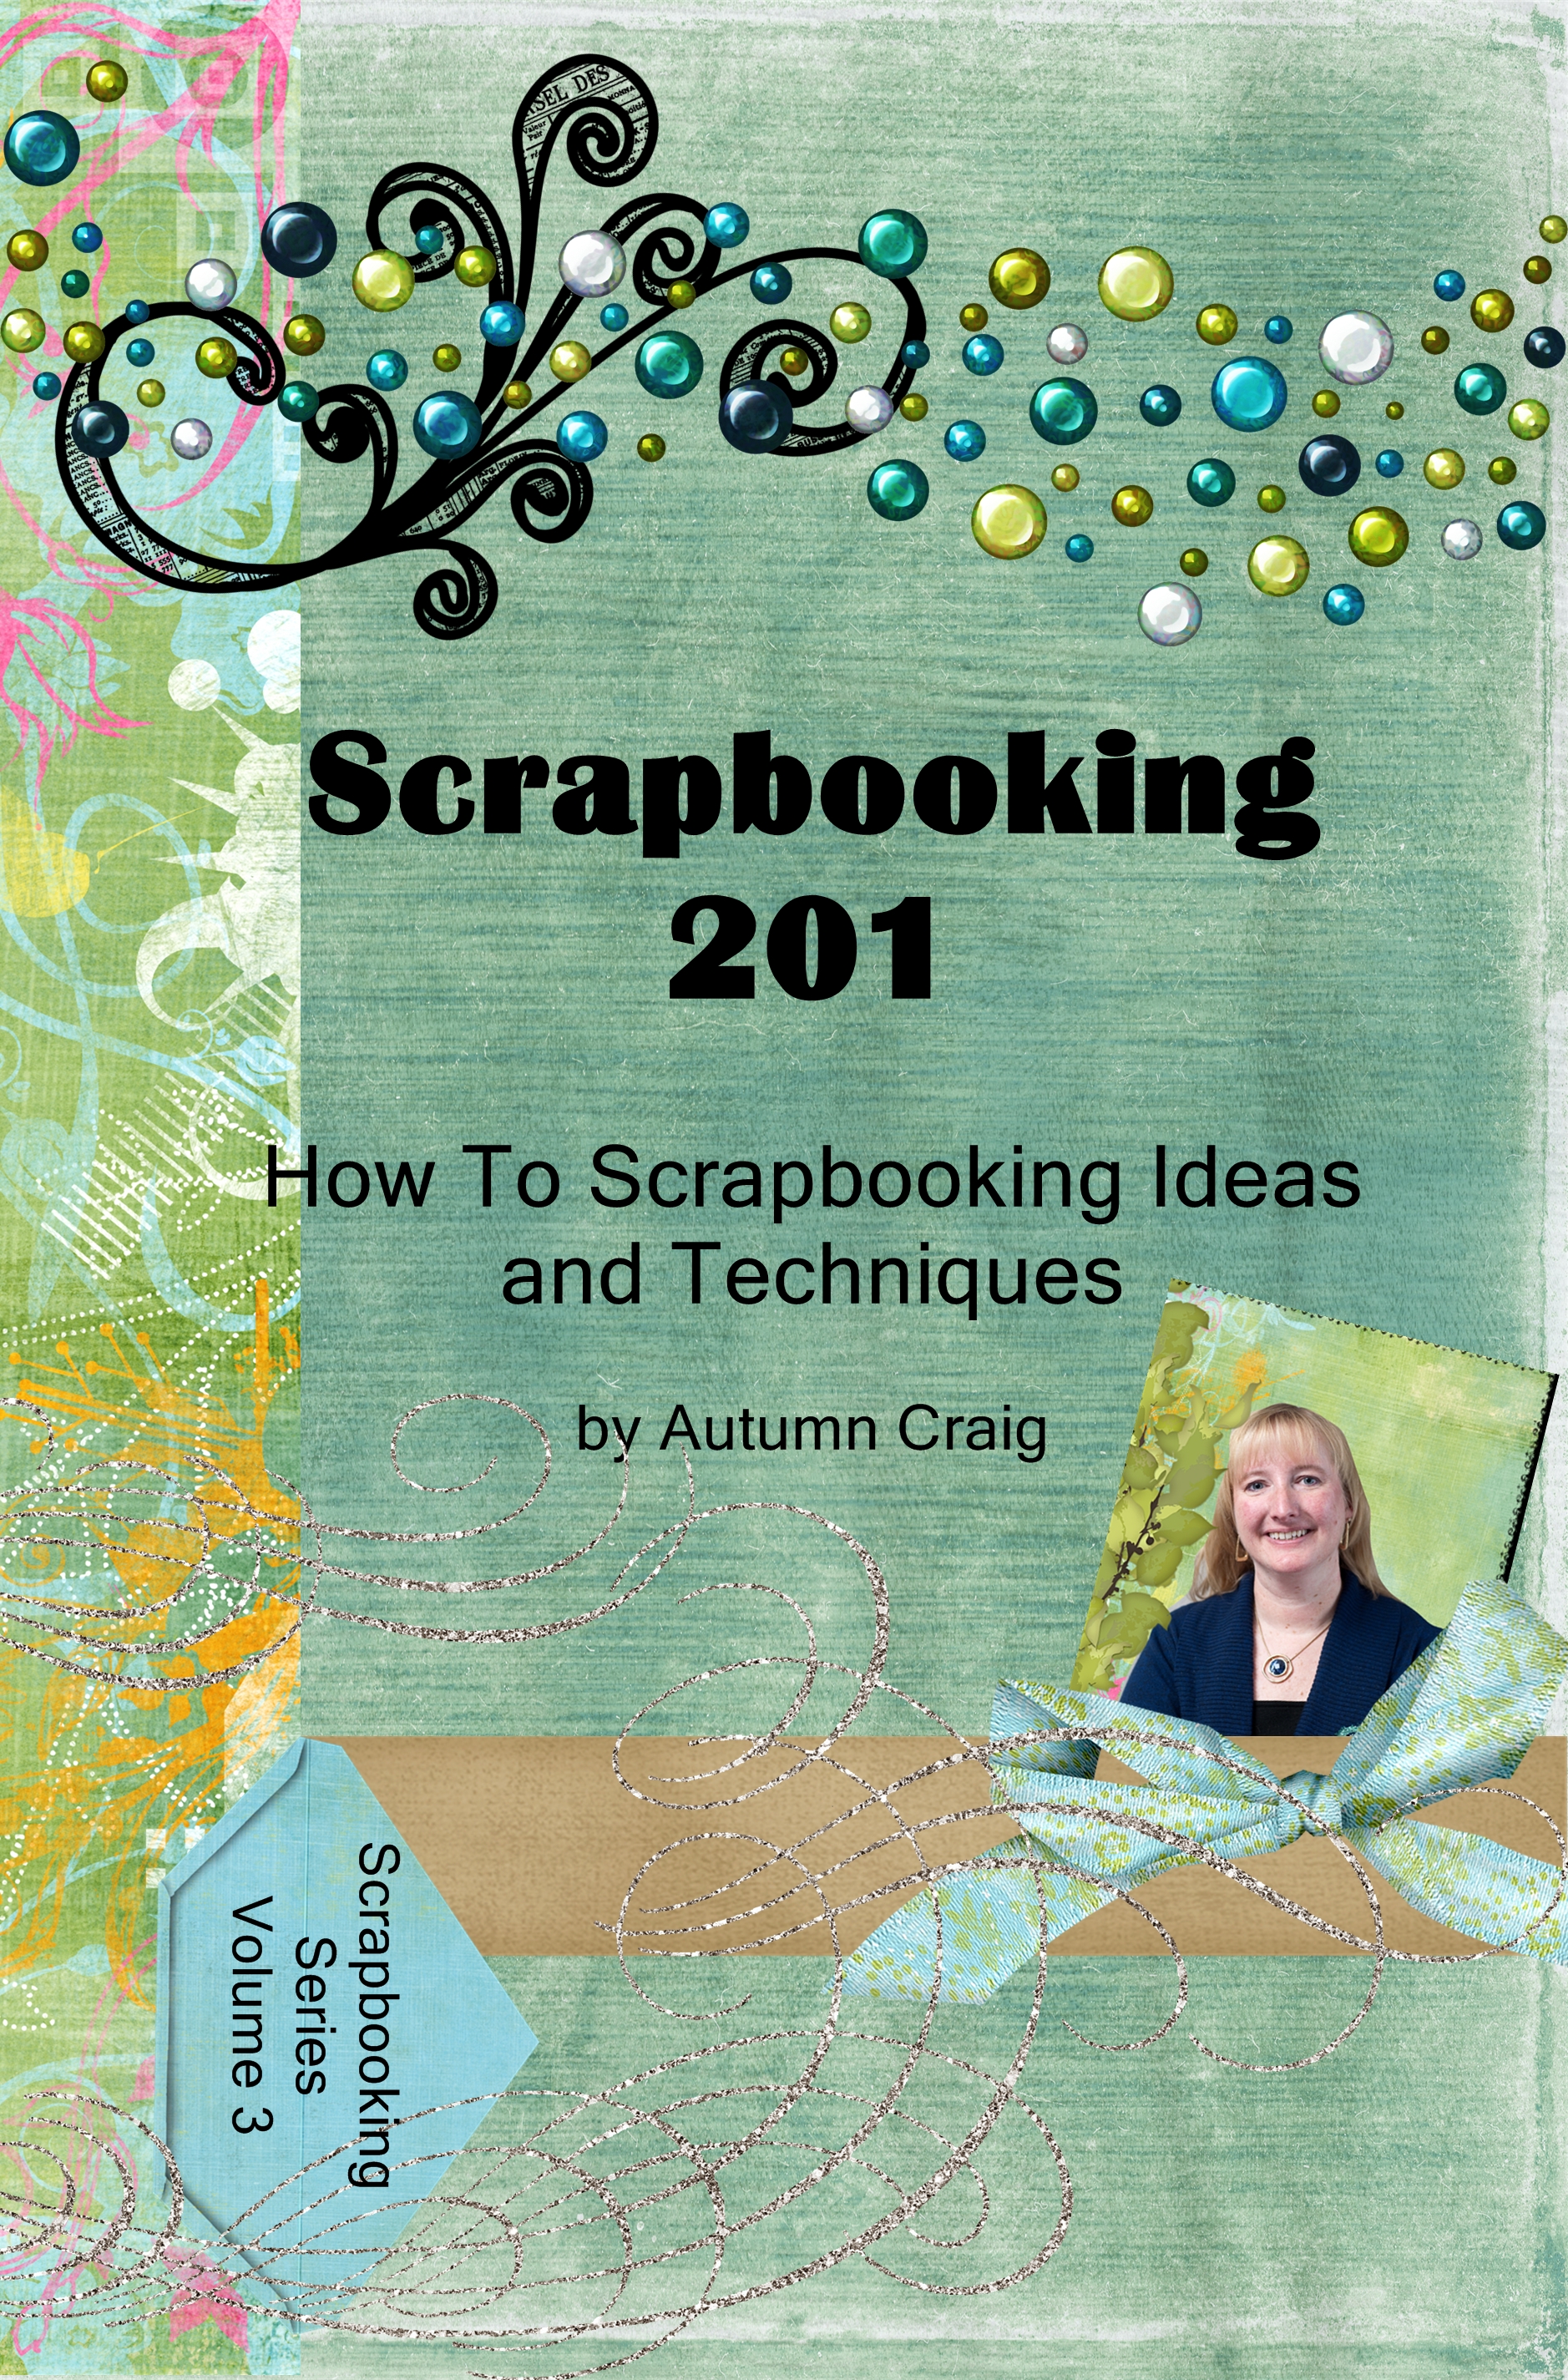 scrapbooking 201 cover